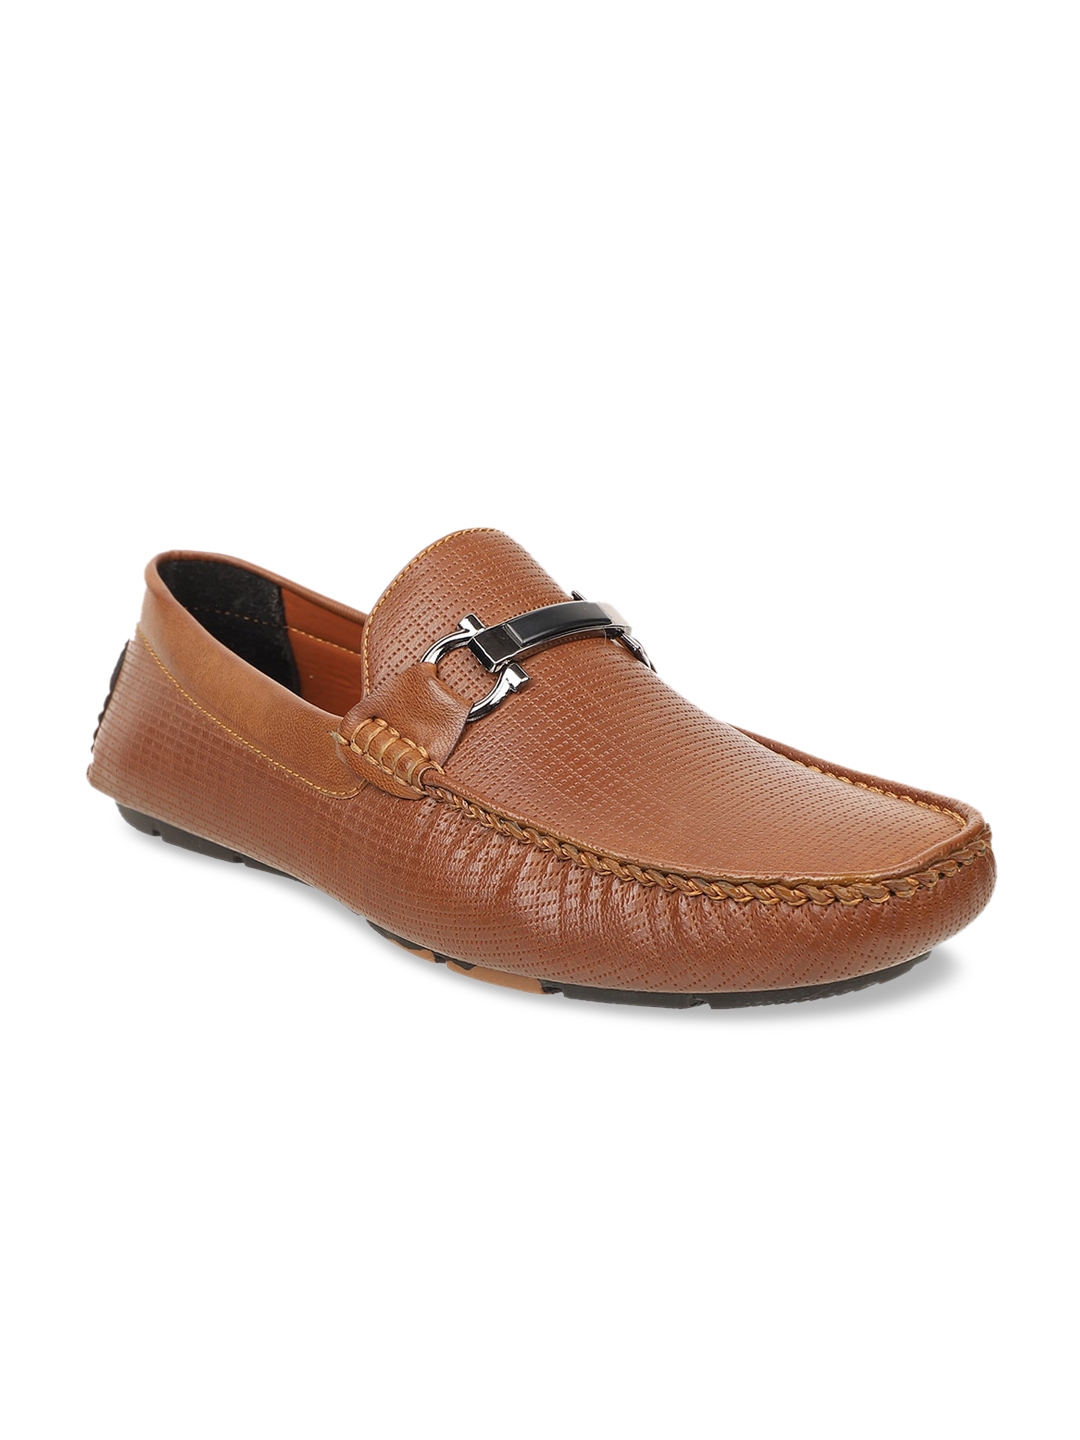 Buy Carlton London Men Tan Driving Shoes - Casual Shoes for Men ...